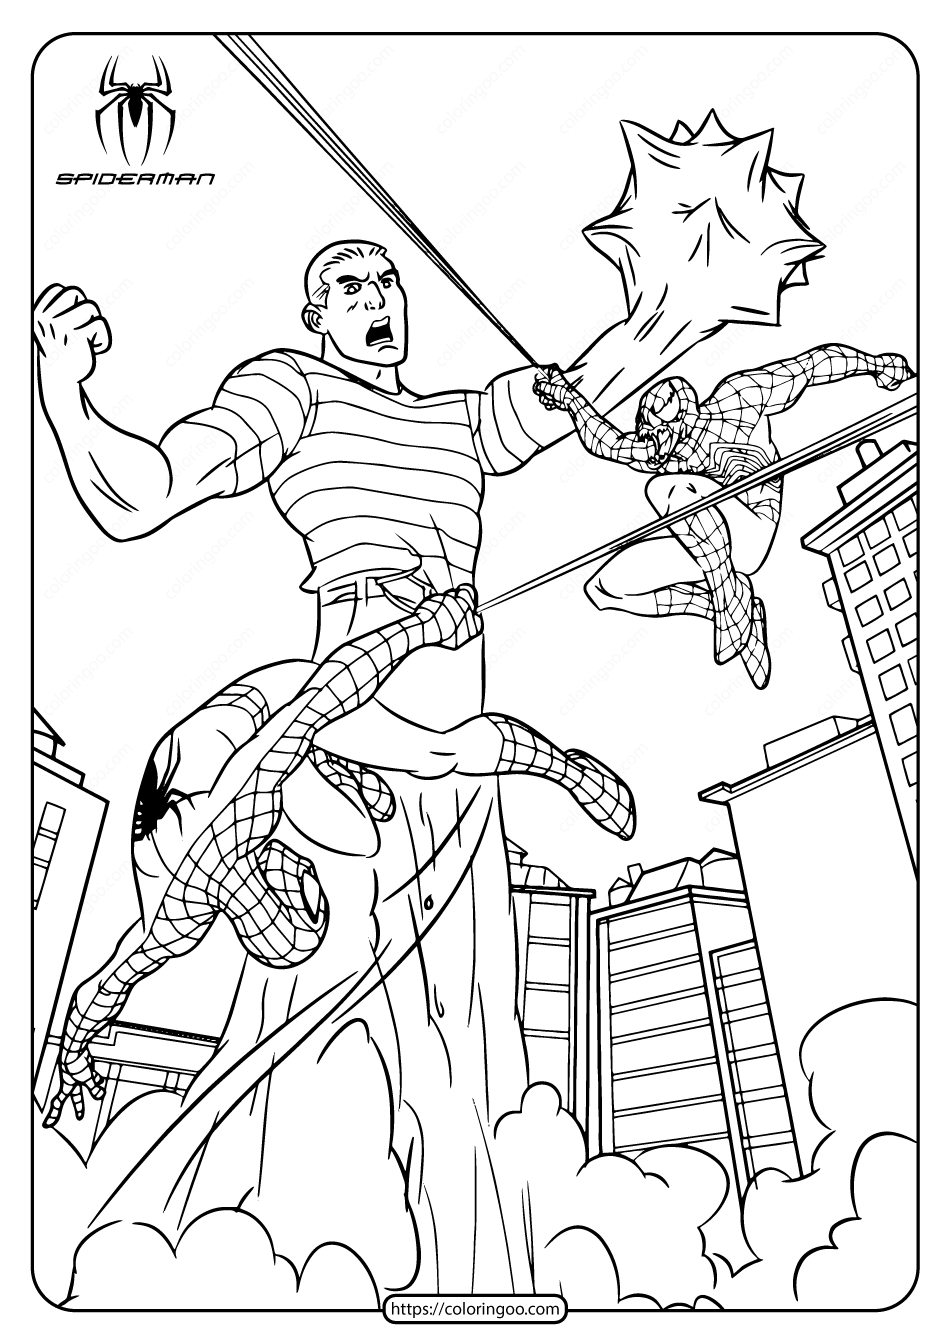 Marvel spiderman vs sandman coloring page spiderman coloring superhero coloring dinosaur coloring pages